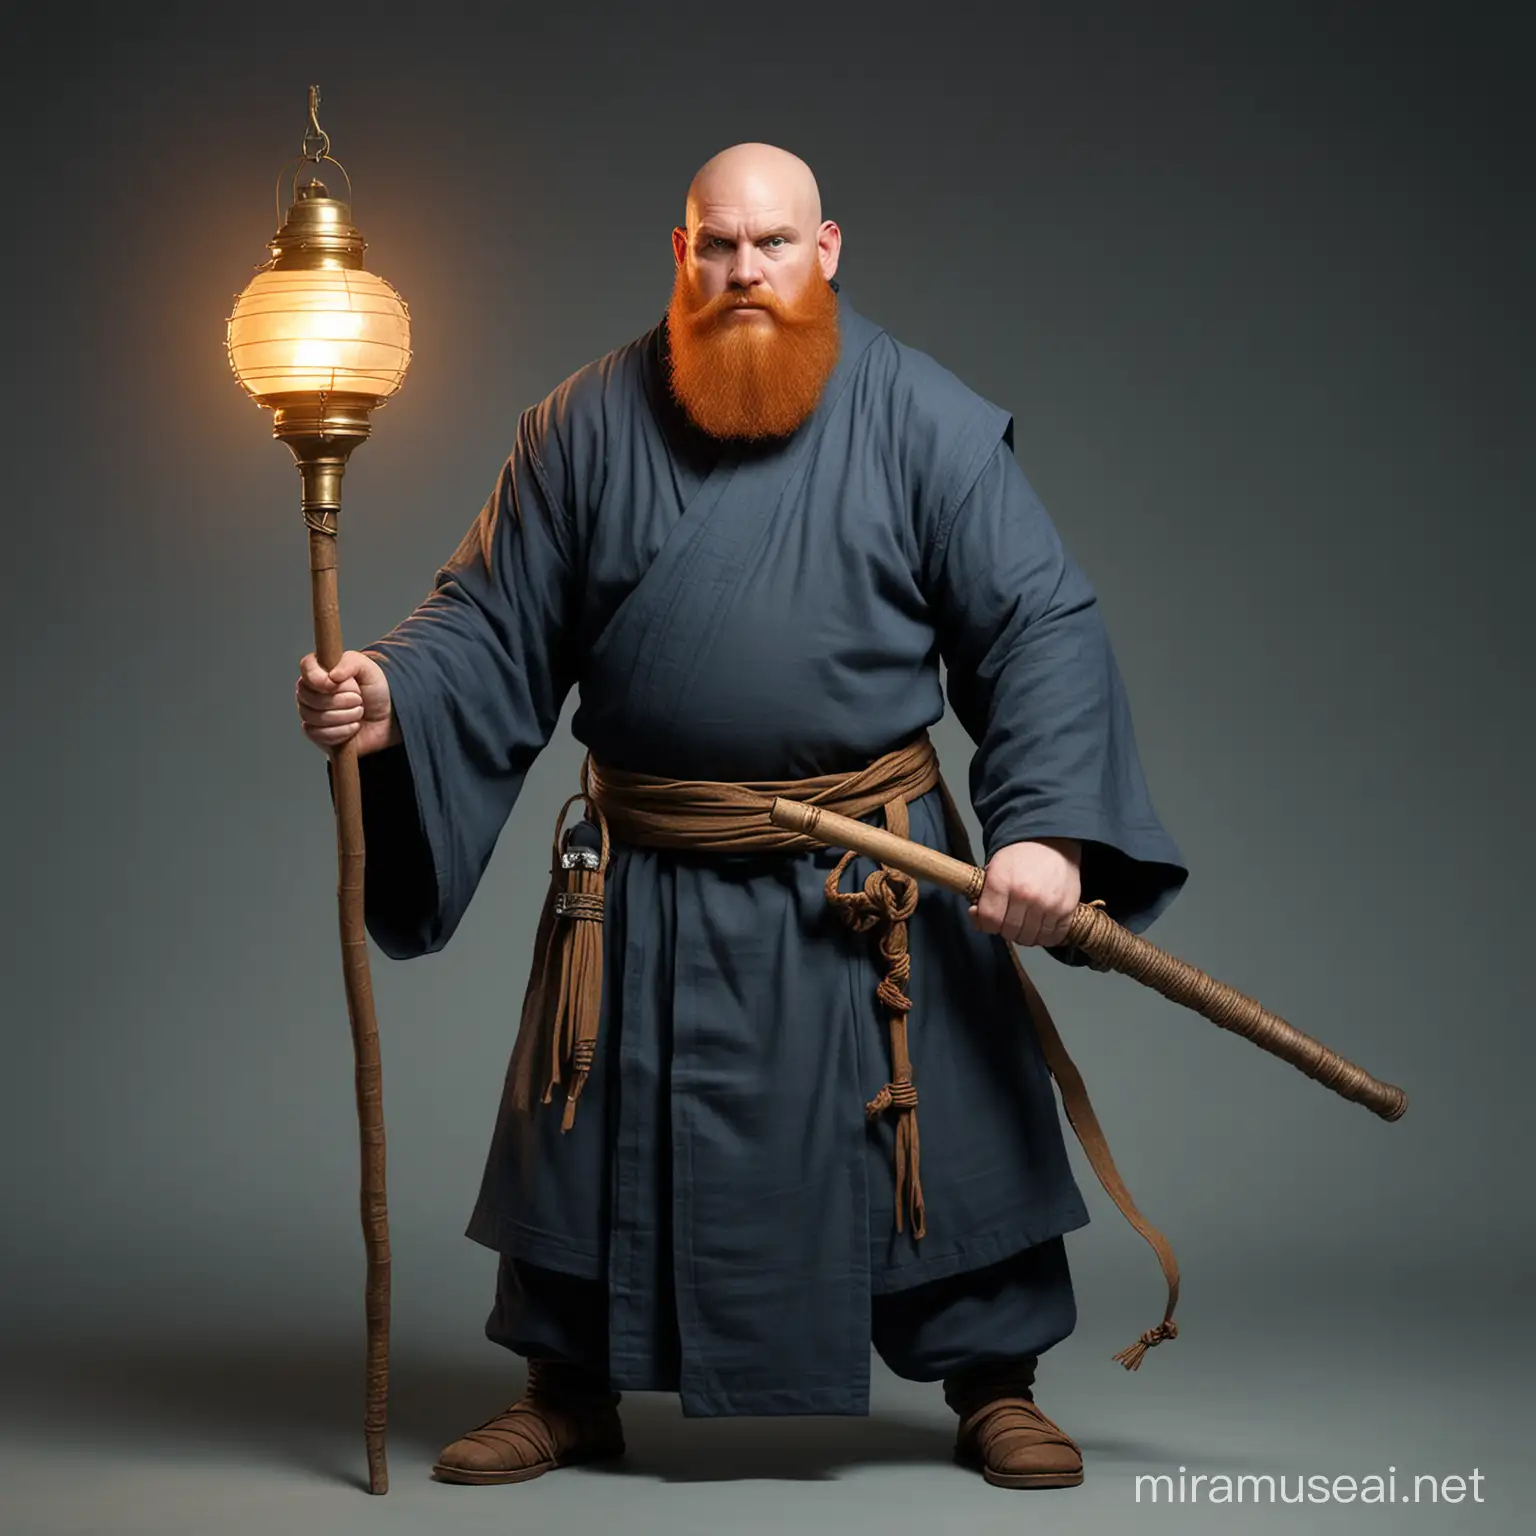 Monk, fighting stance, holding a quarterstaff, holding a lantern, fat, Bald, big ginger beard, dark Blue eyes, tall, male.
